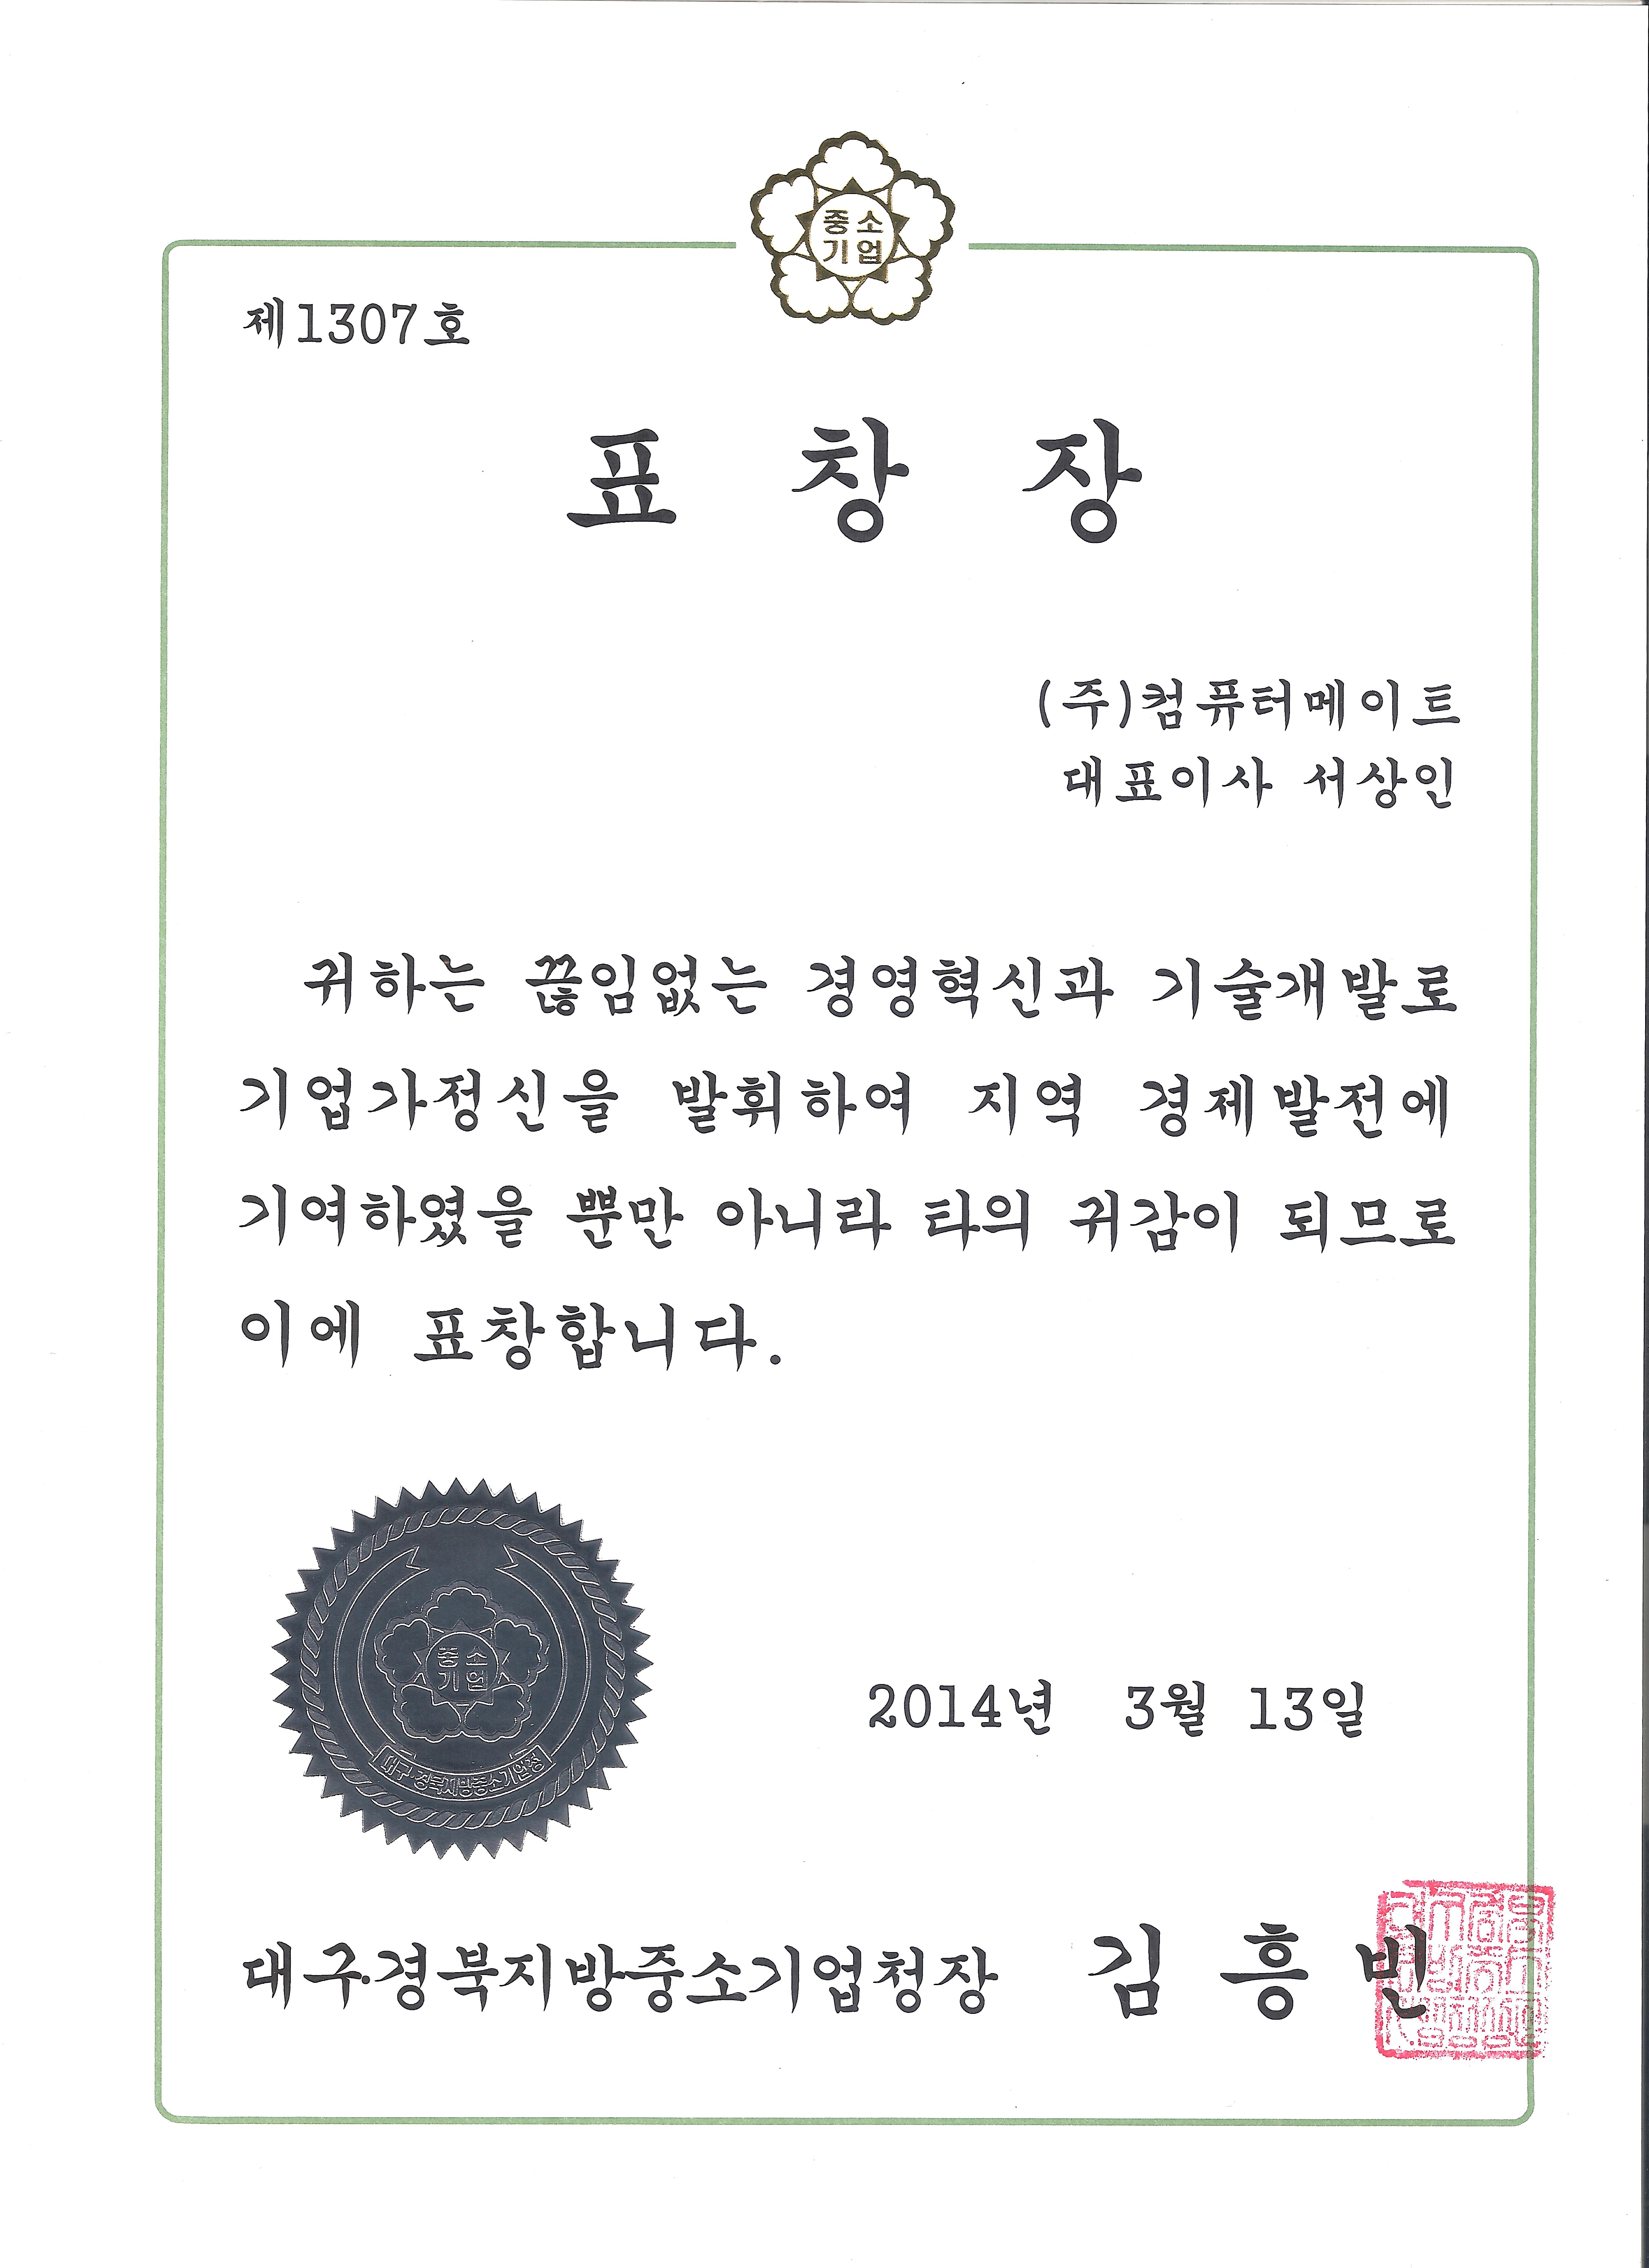 Commendation from Daegu Gyeongbuk Regional Small and Medium Business Administration